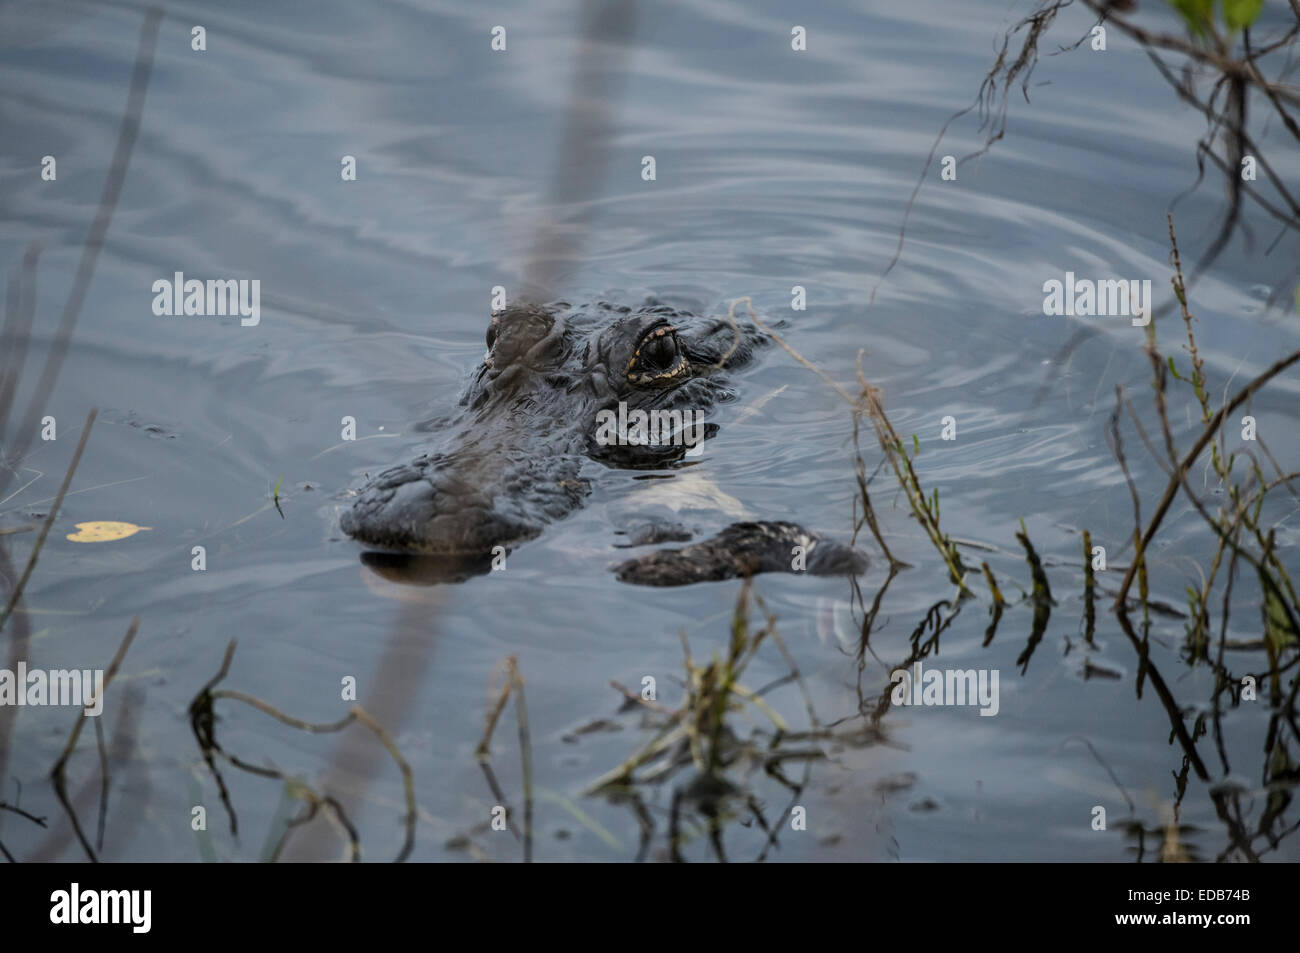 Small Alligator with submerged bird in jaws. Merritt Island National WIldlife Refuge Stock Photo